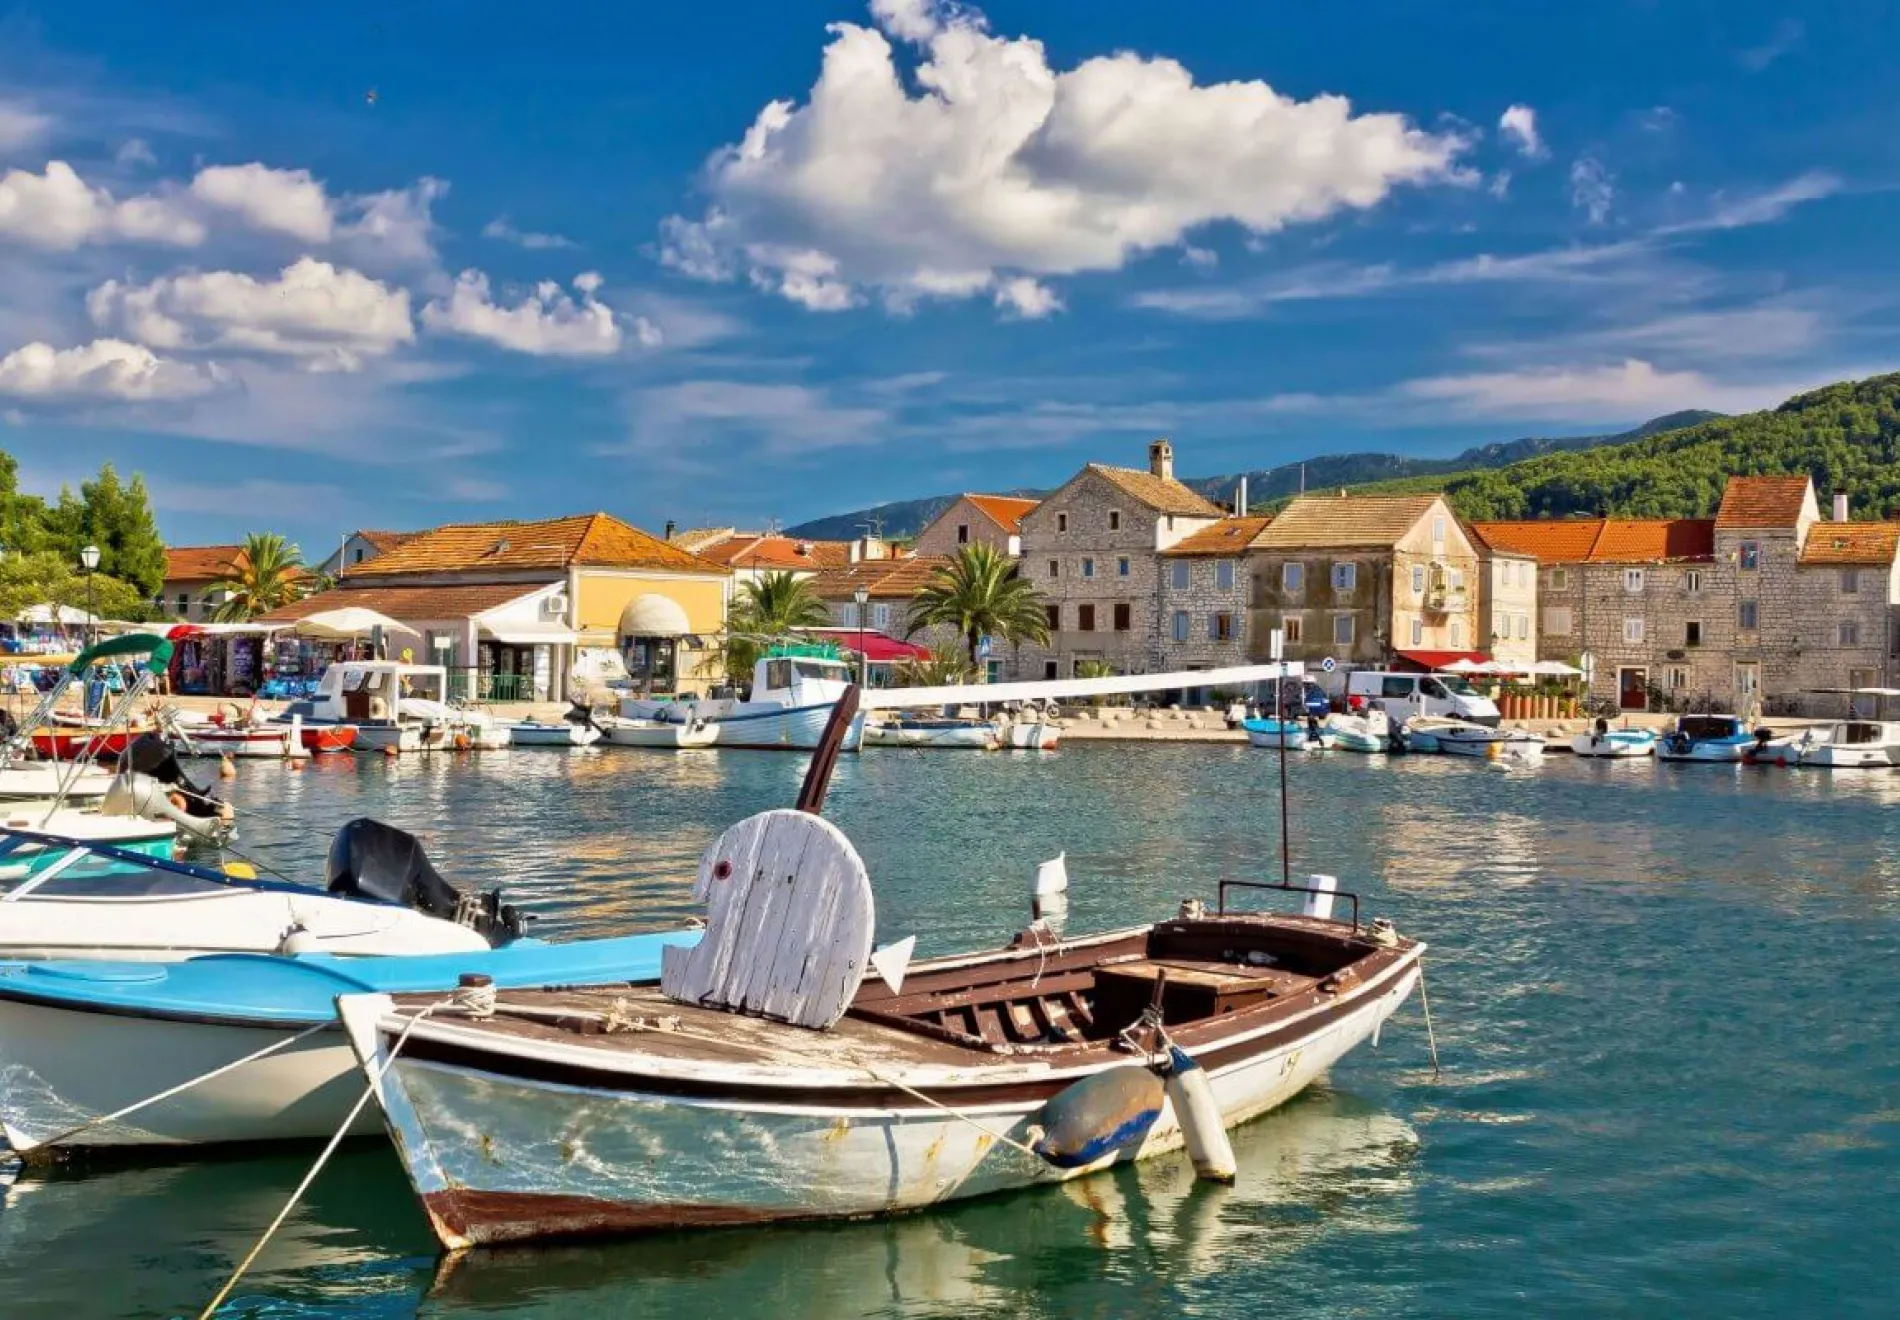 Stari Grad Hvar island in Croatia